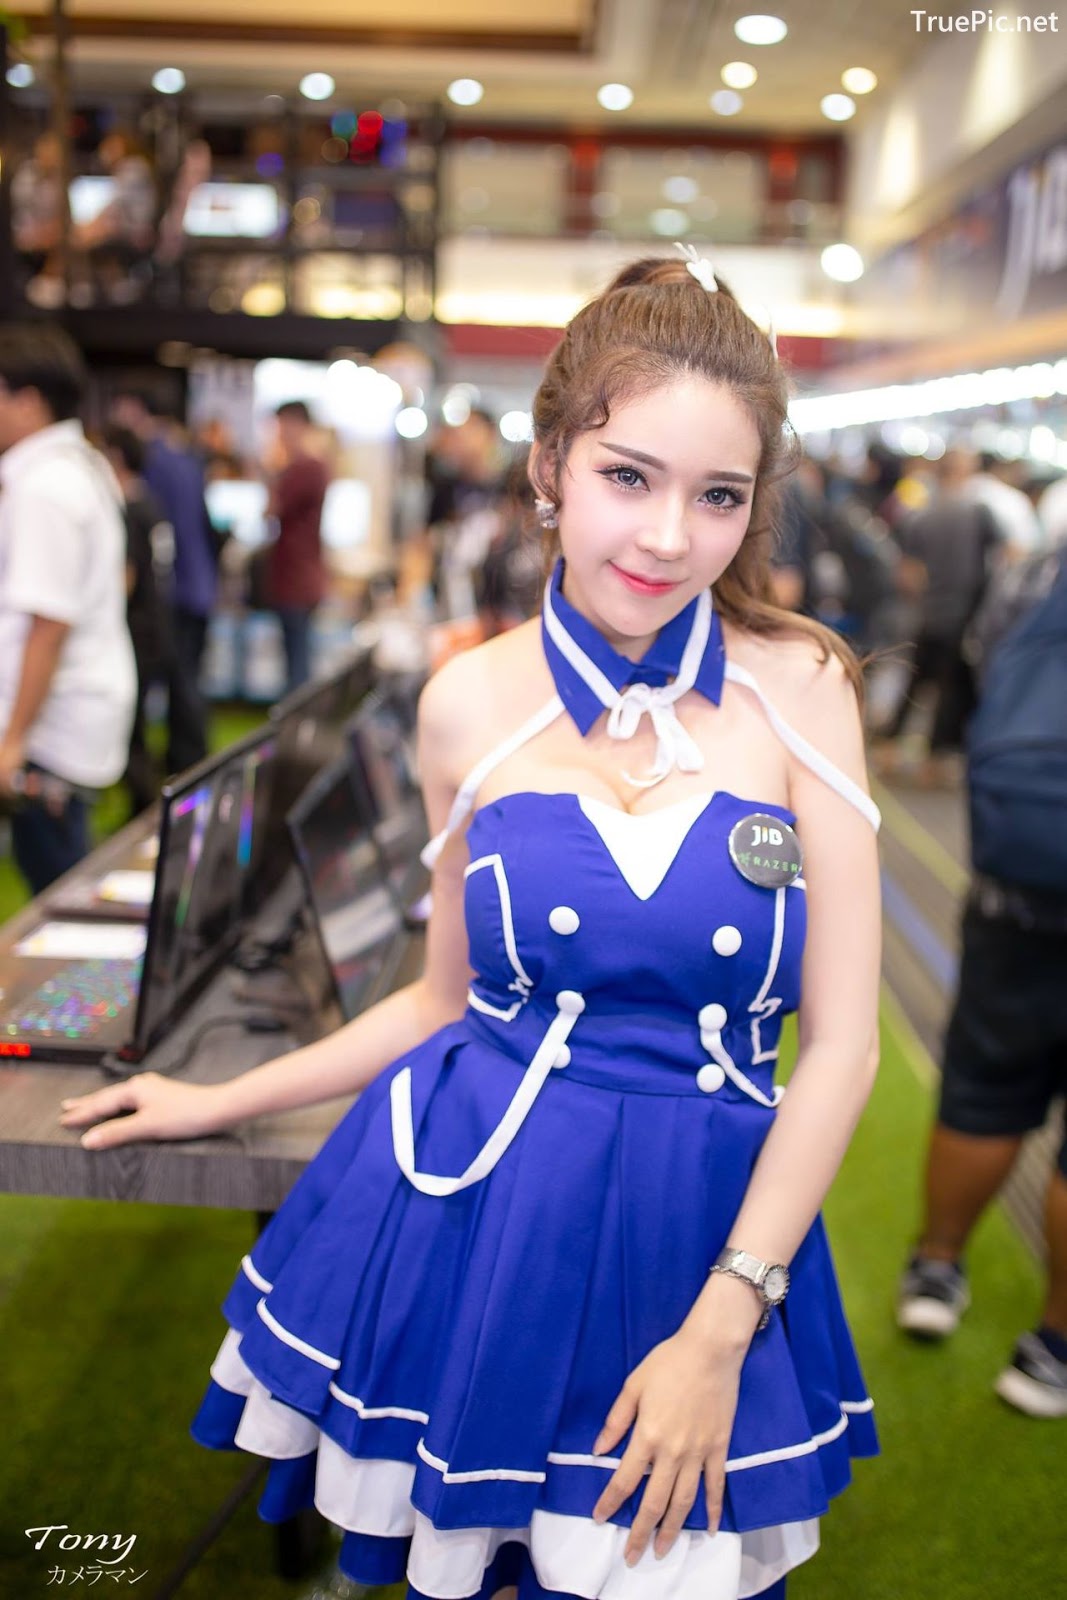 Image-Thailand-Hot-Model-Thai-PG-At-Commart-2018-TruePic.net- Picture-7